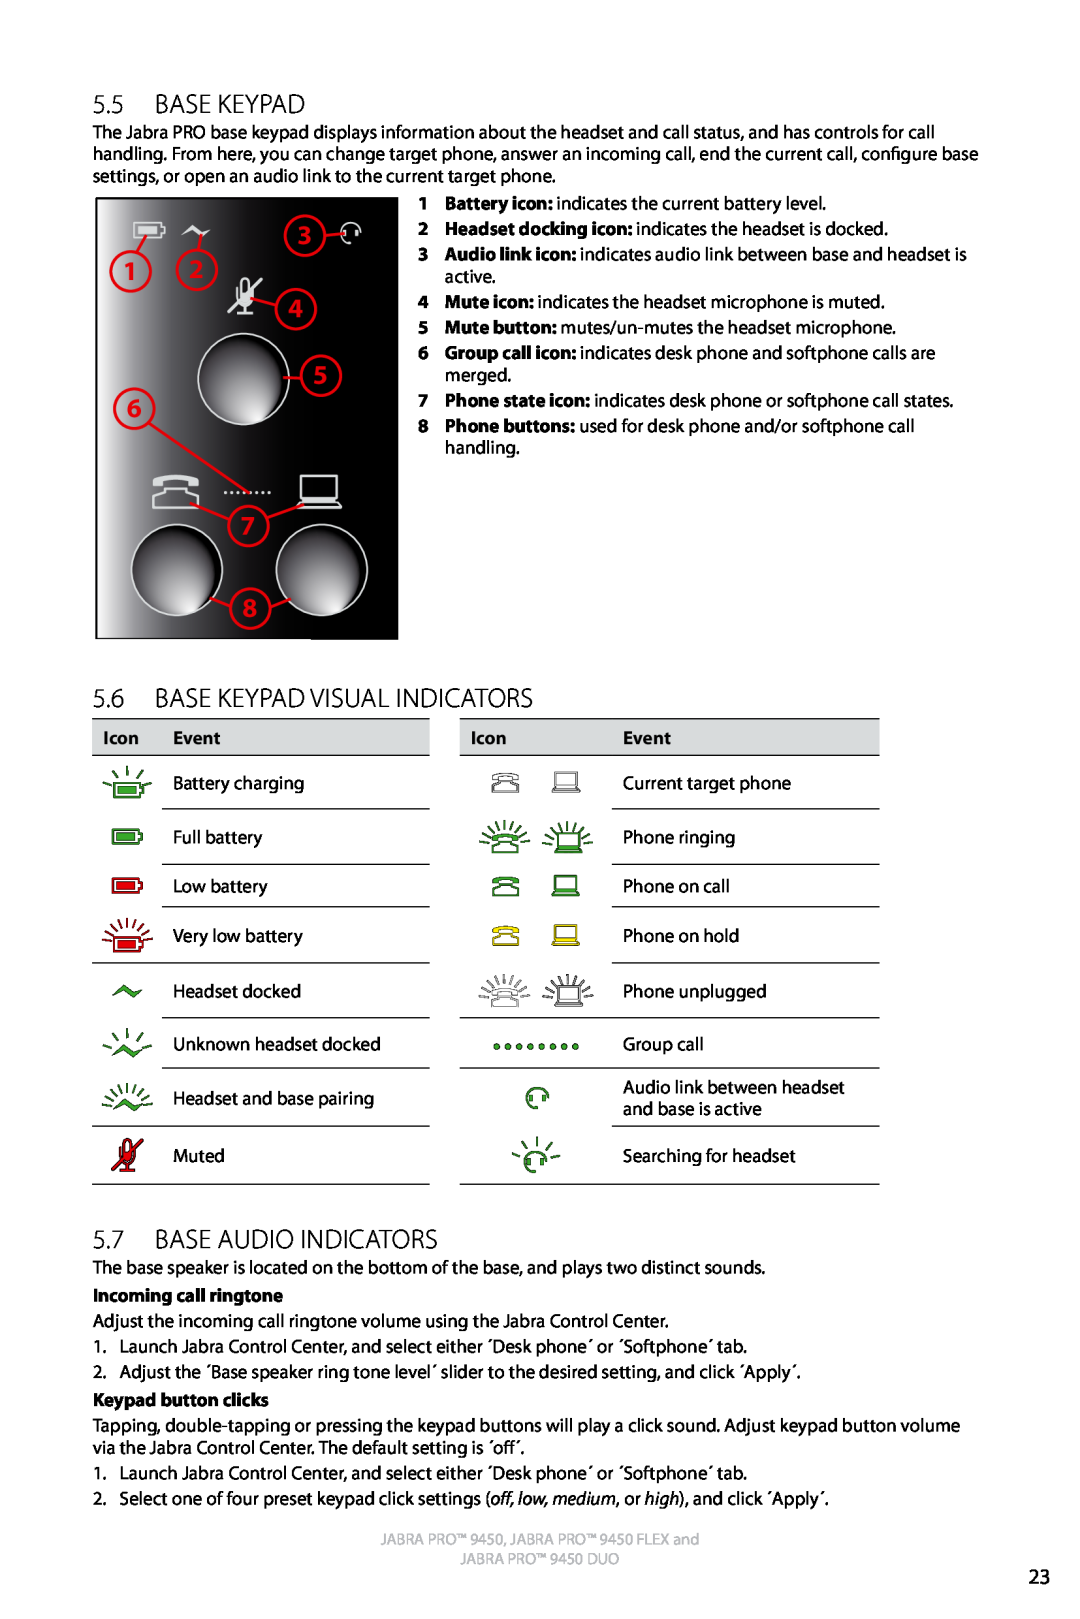 Jabra 9450 Base Keypad Visual Indicators, Base Audio Indicators, Icon Event, IconEvent, Incoming call ringtone 